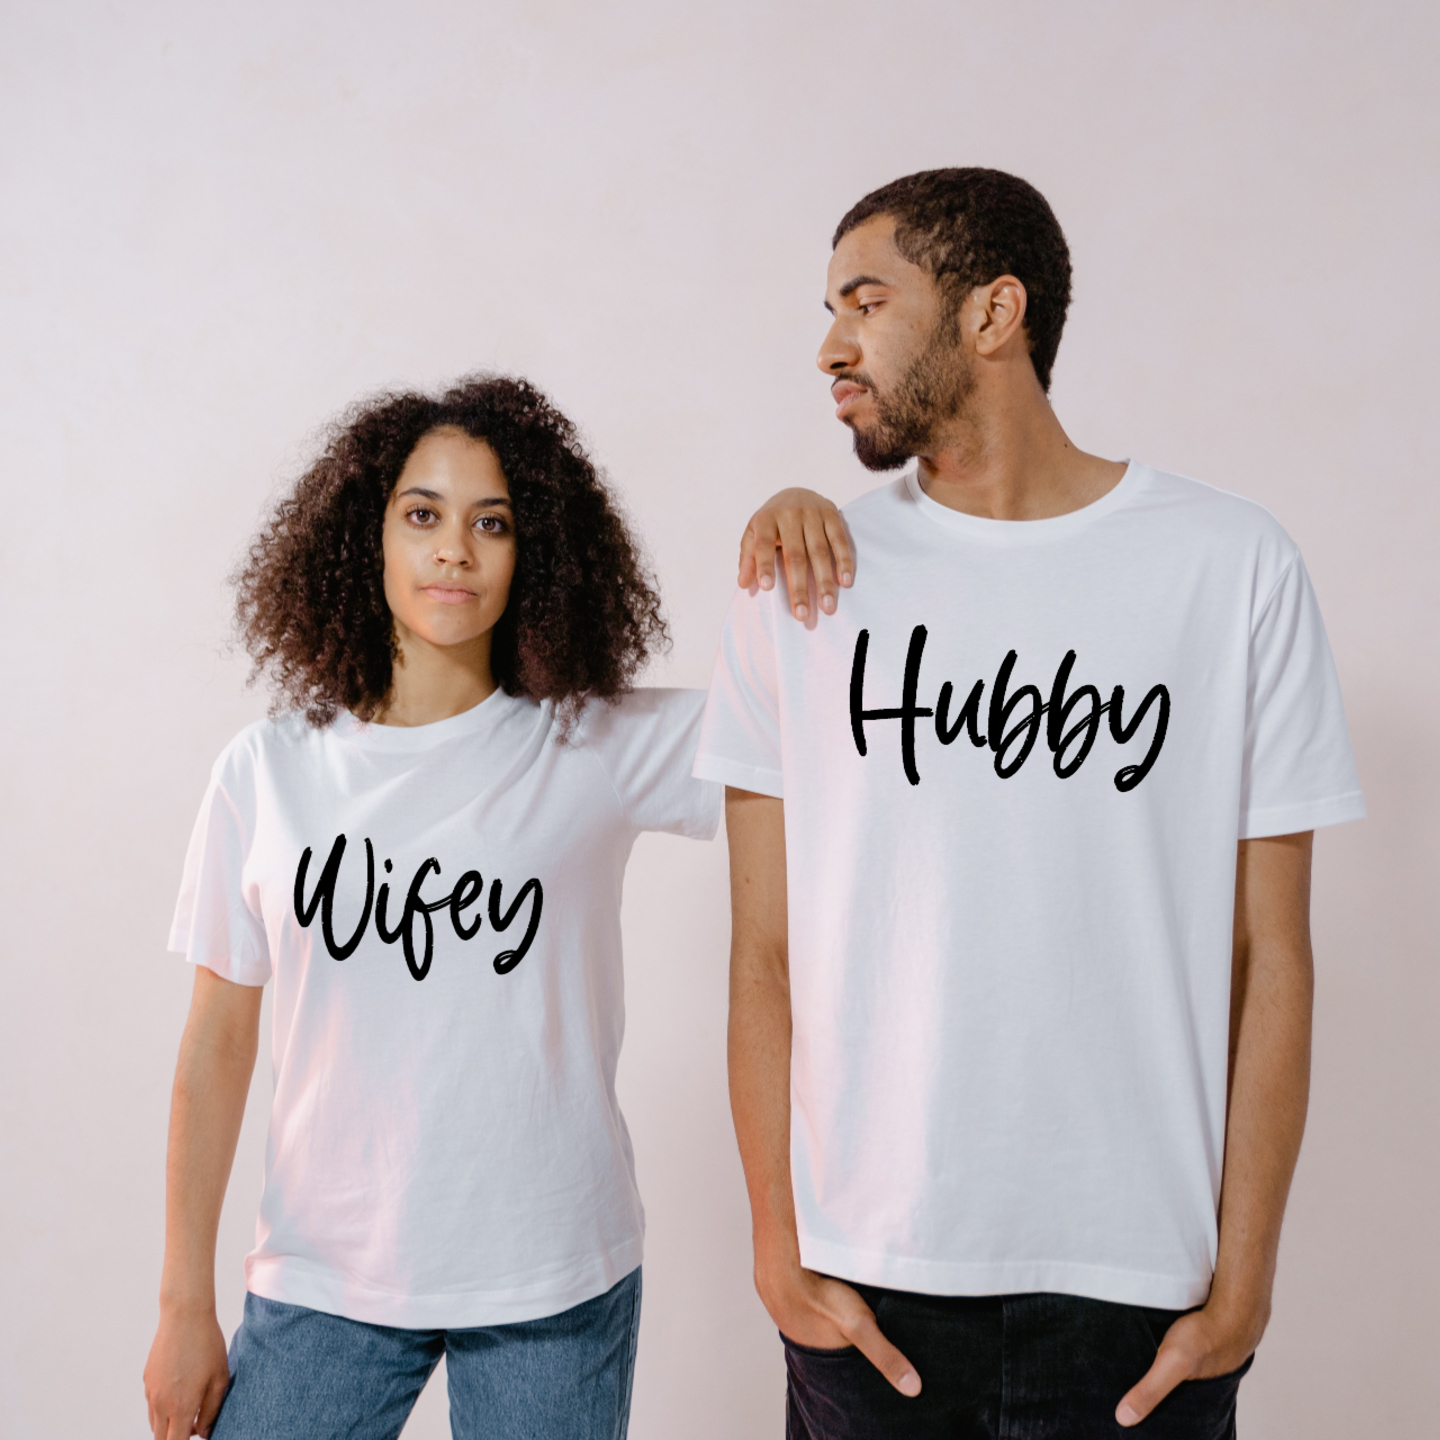 Hubby & Wifey Printed T-Shirt